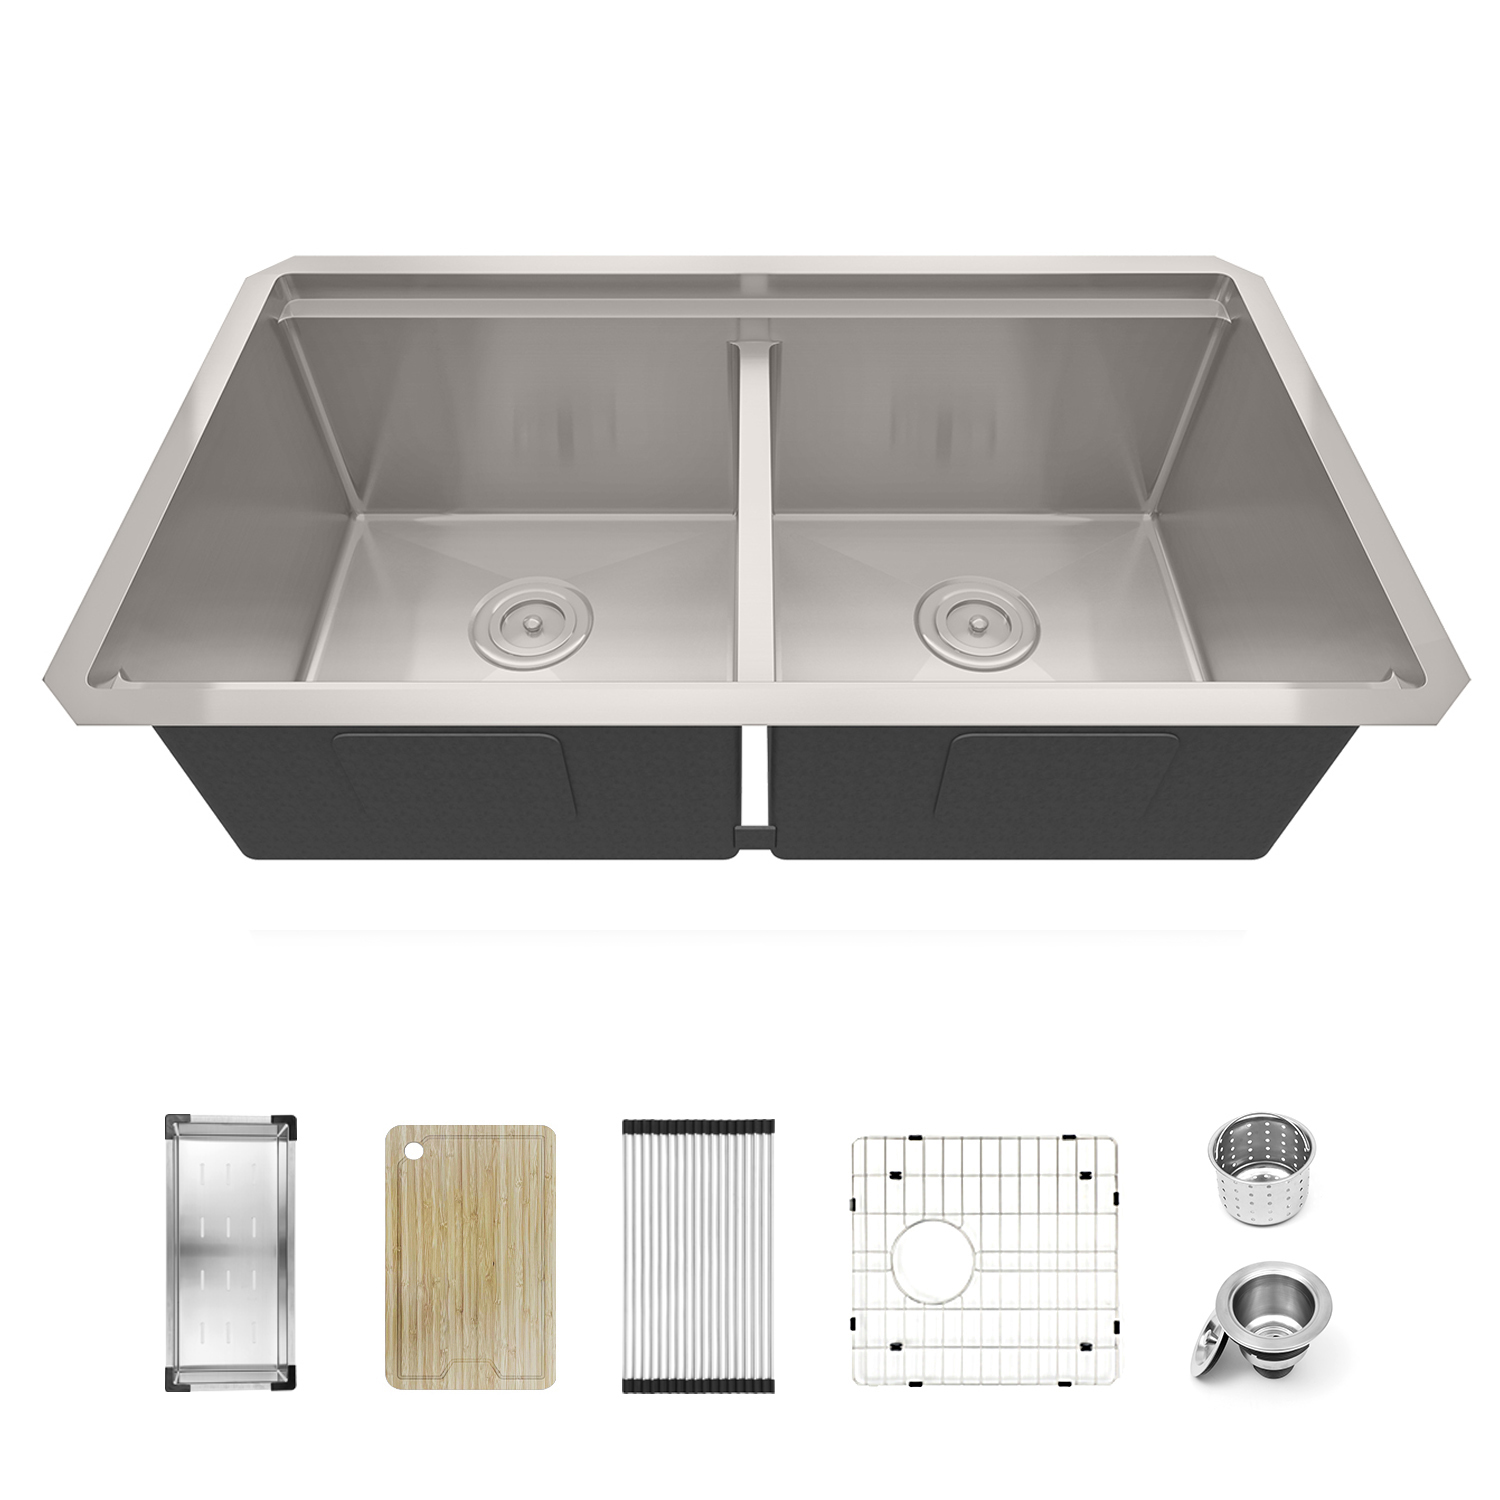 KSS0003D-OL 33" 16 Gauge Undermount Double Bowl 304 Stainless Steel Workstation Kitchen Sink With Accessories